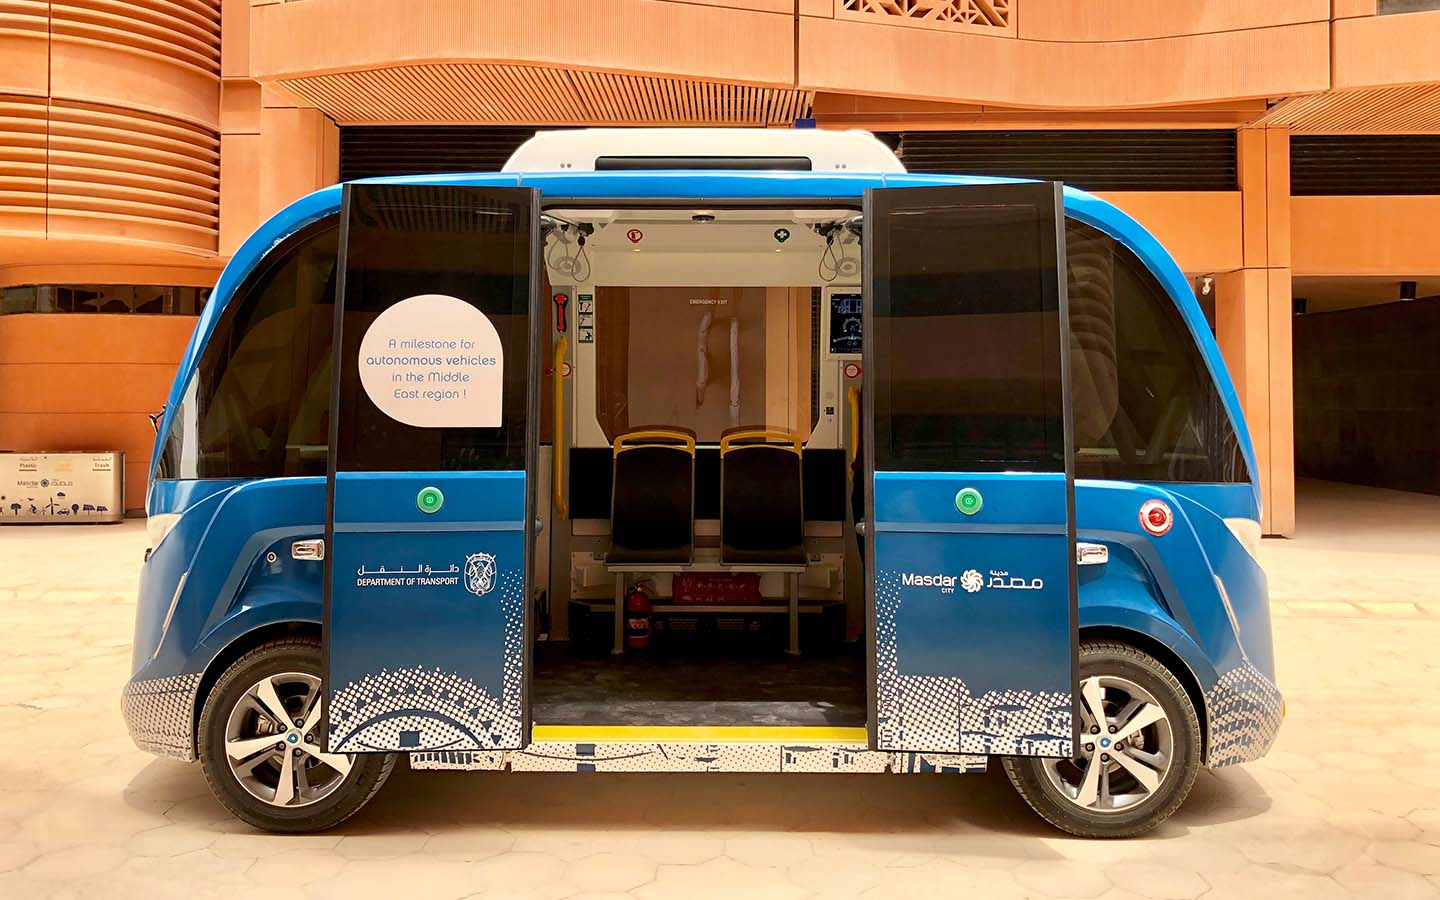 autonomous car service in Masdar is a notble project in the capital city